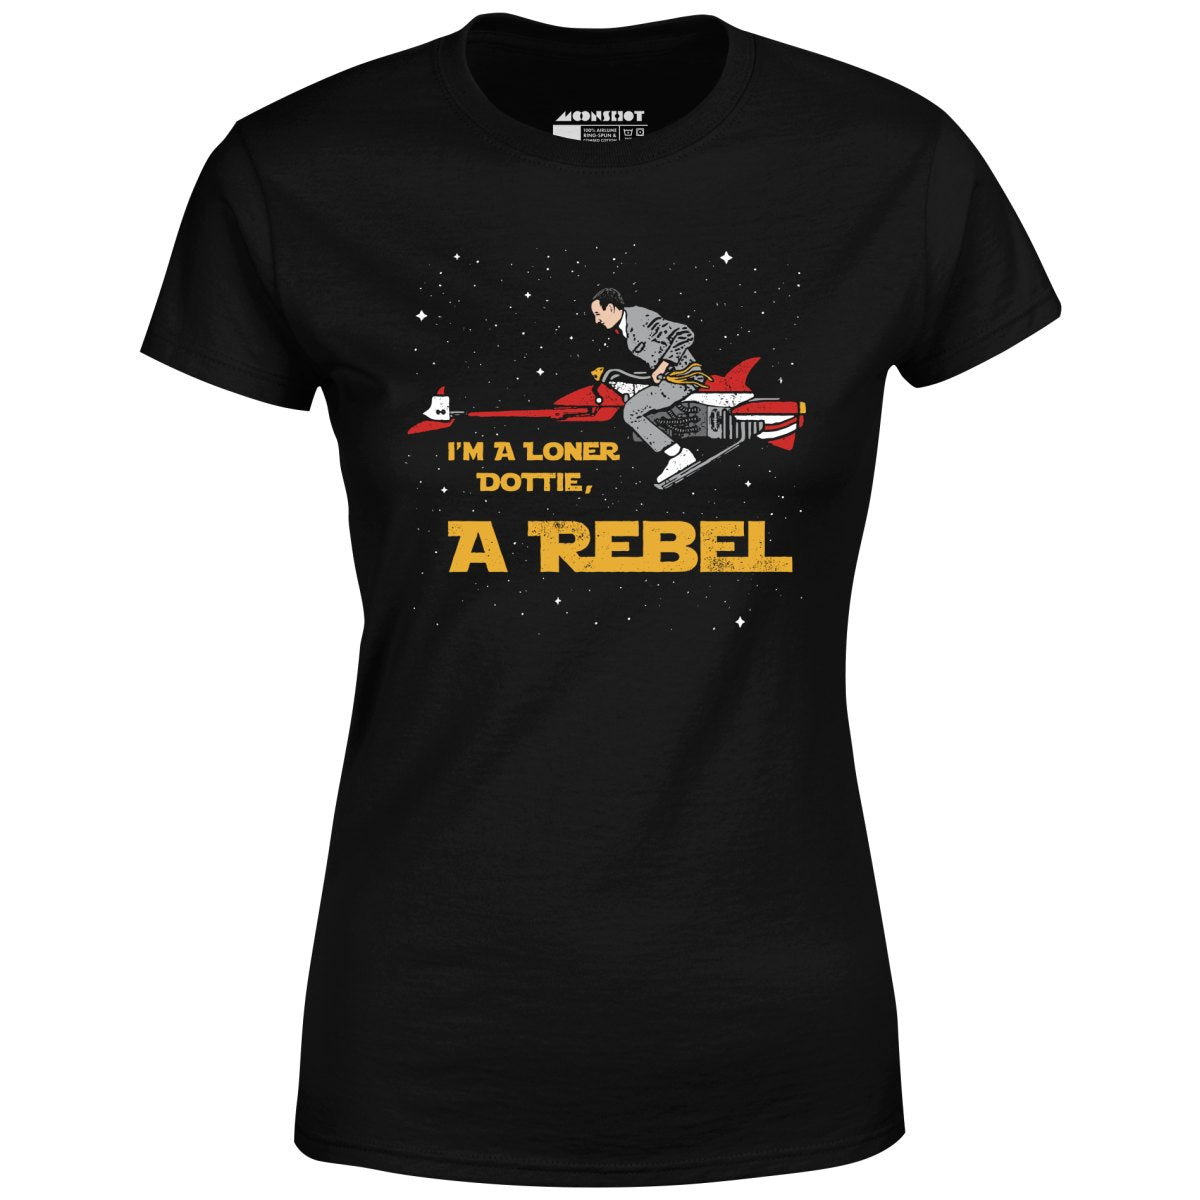 I'm a Loner Dottie, a Rebel - Women's T-Shirt